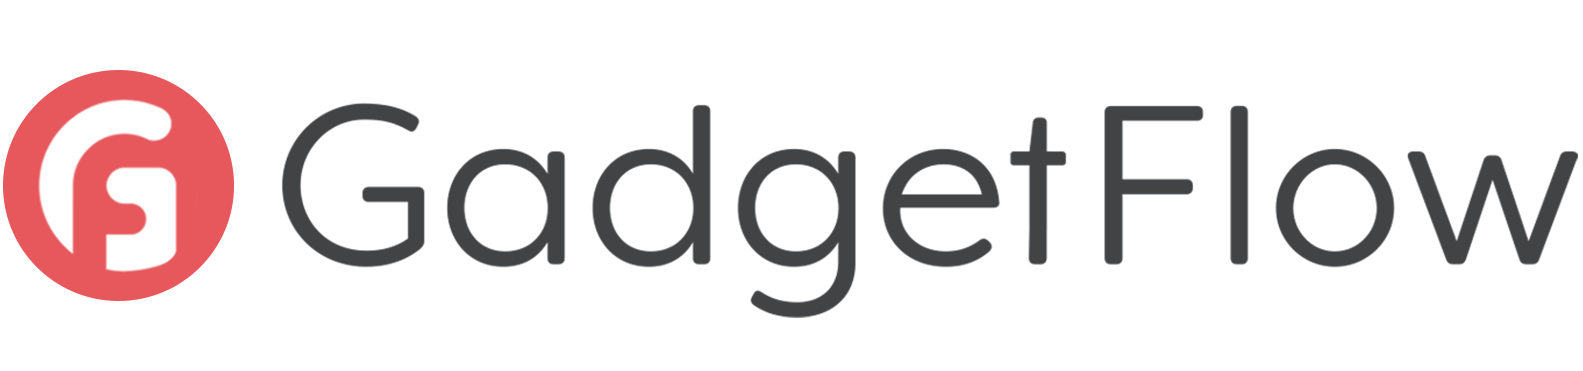 Gadget-Flow-Logo-Main2